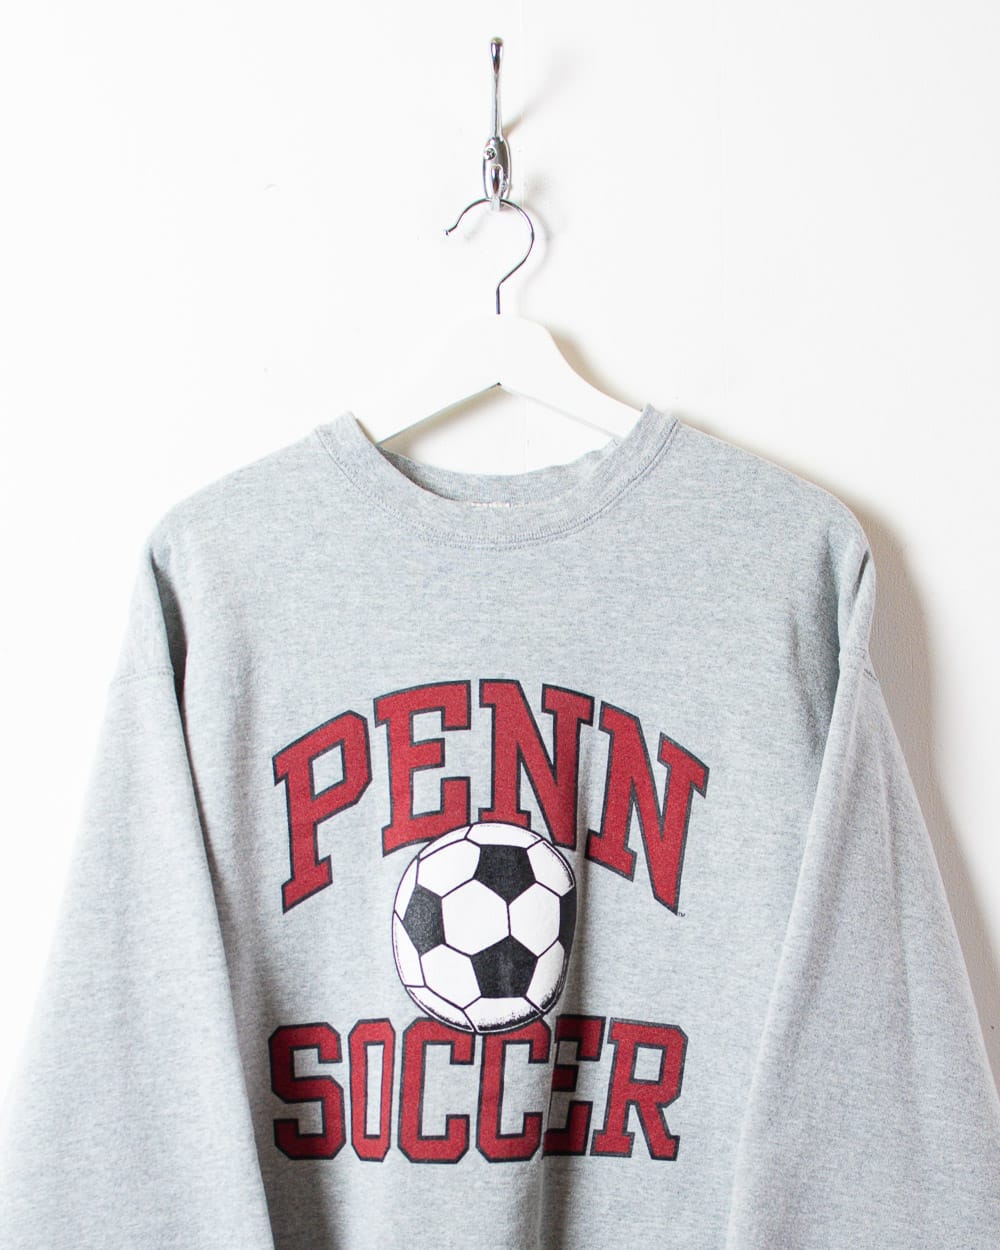 Stone Penn State Soccer Sweatshirt - Small